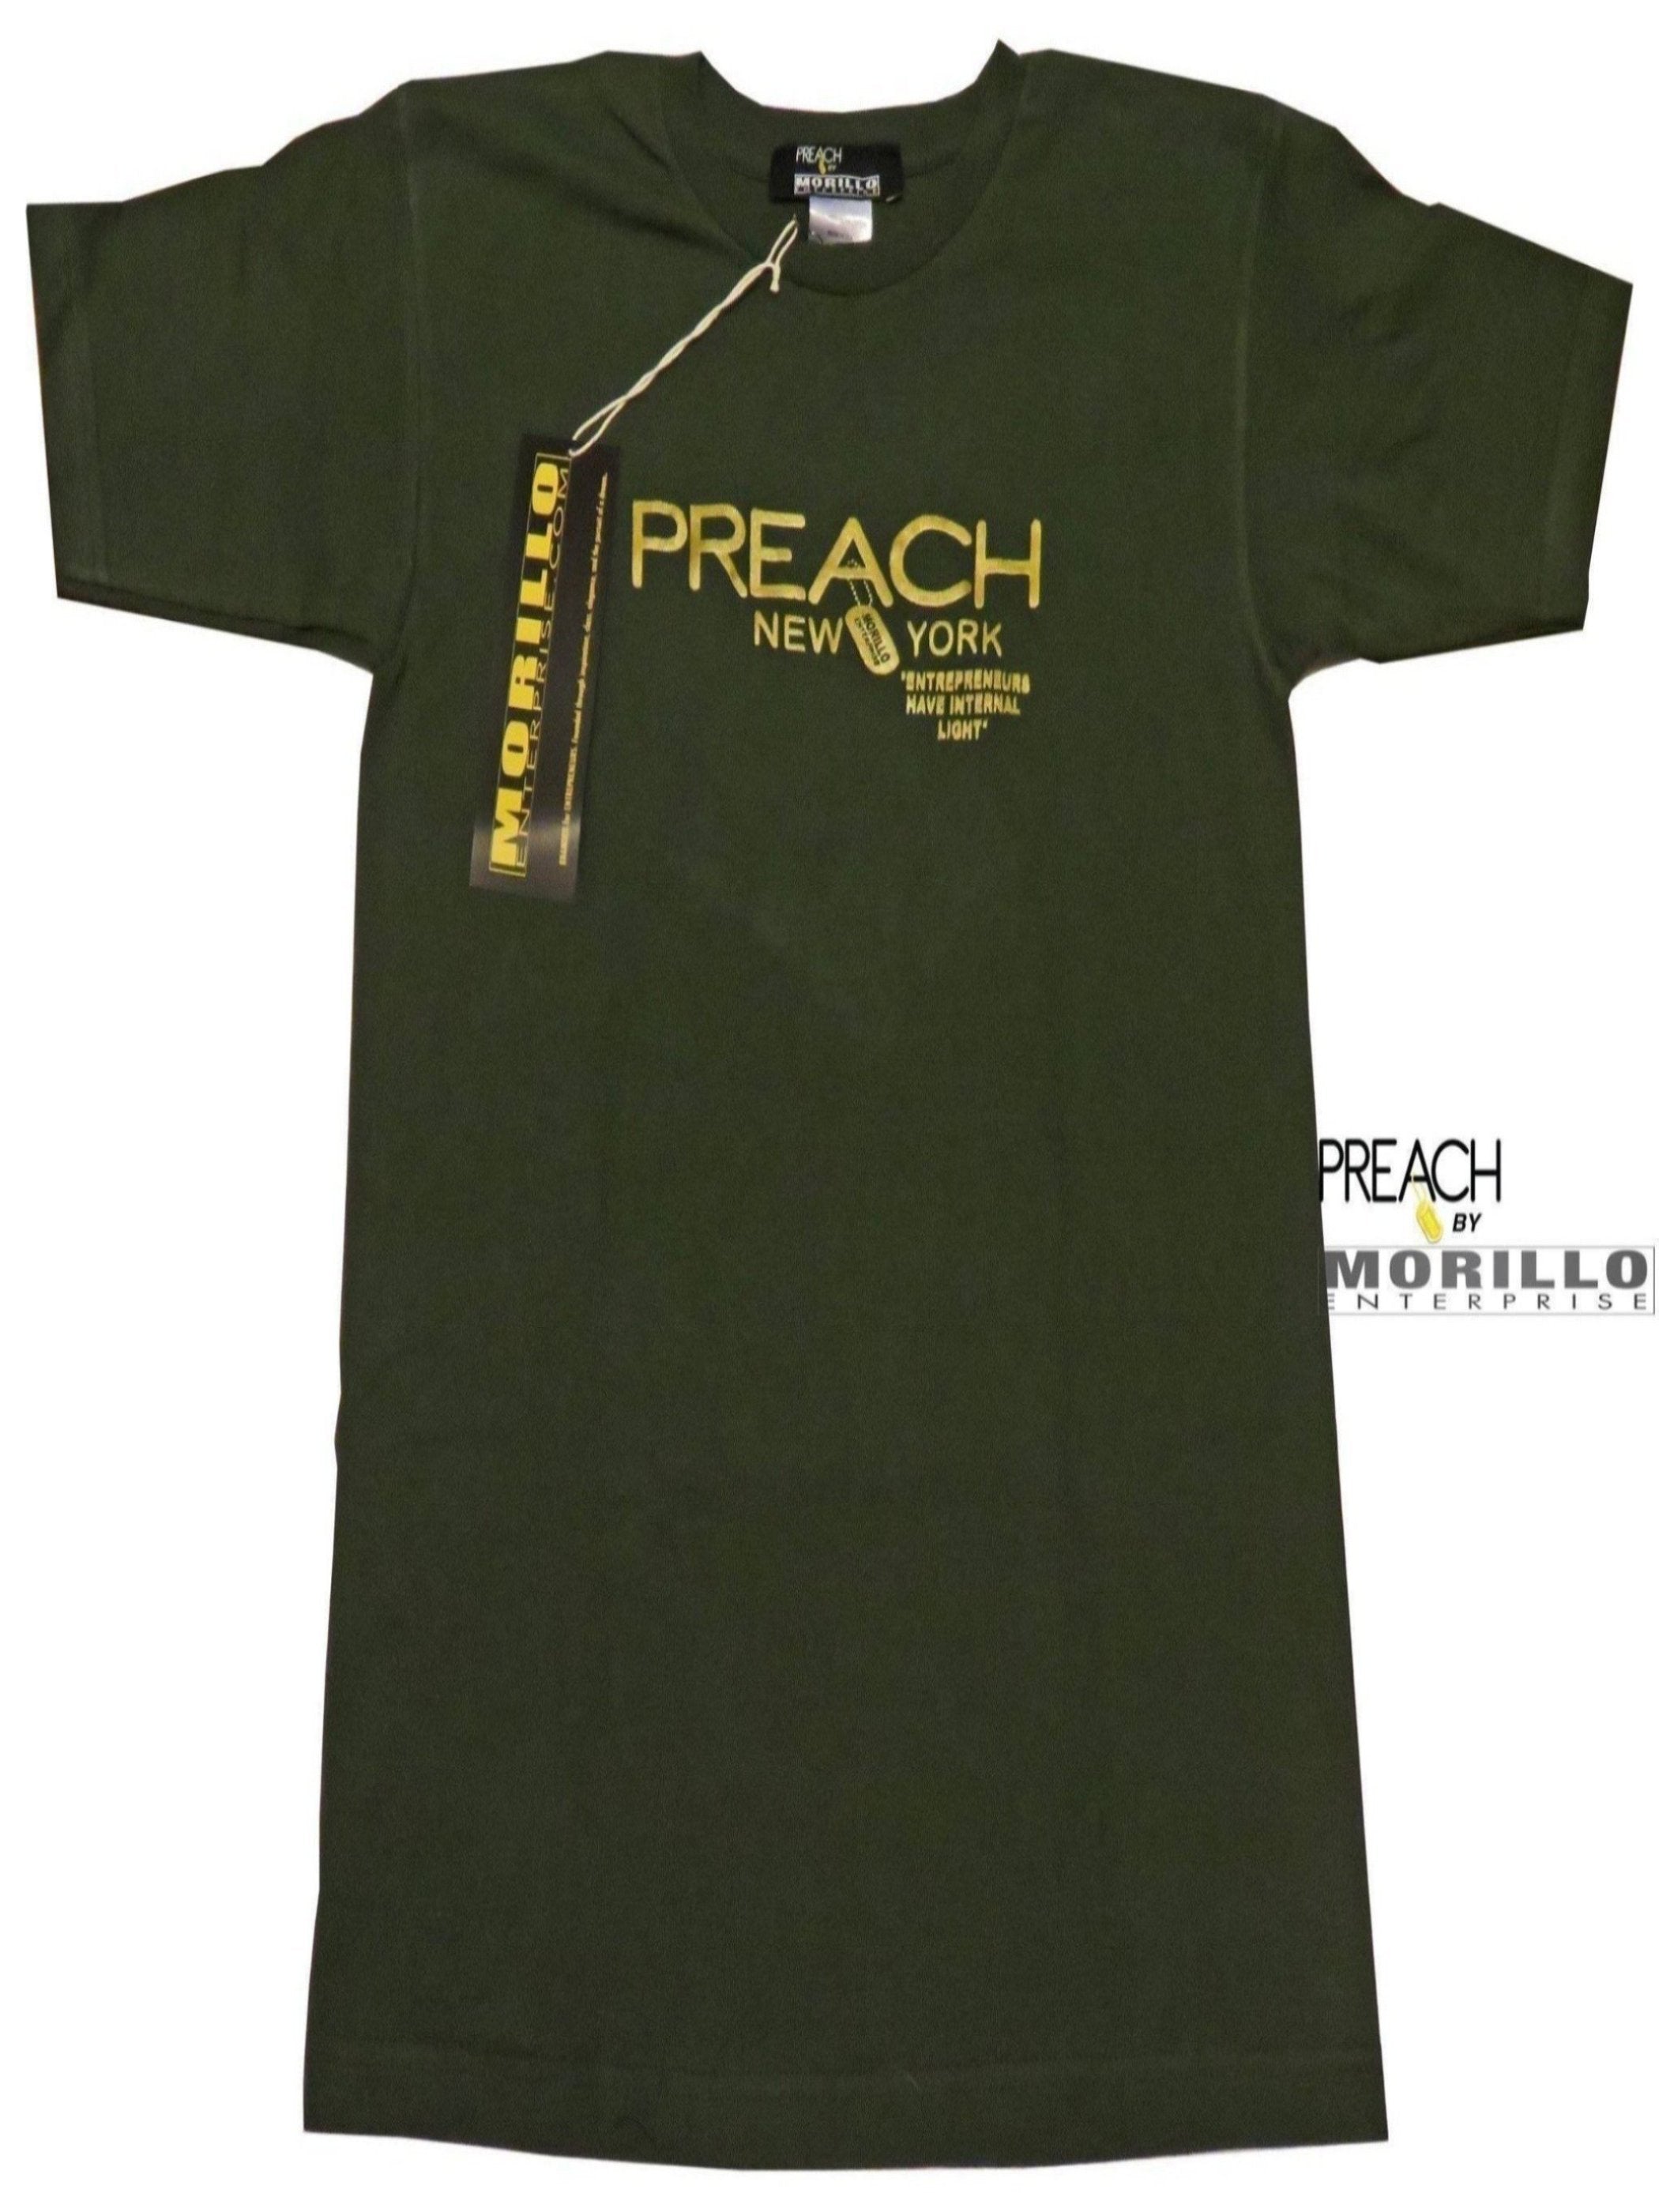 PREACH NEW YORK Signature T-SHIRT T-Shirts, Crewneck - MORILLO ENTERPRISE 